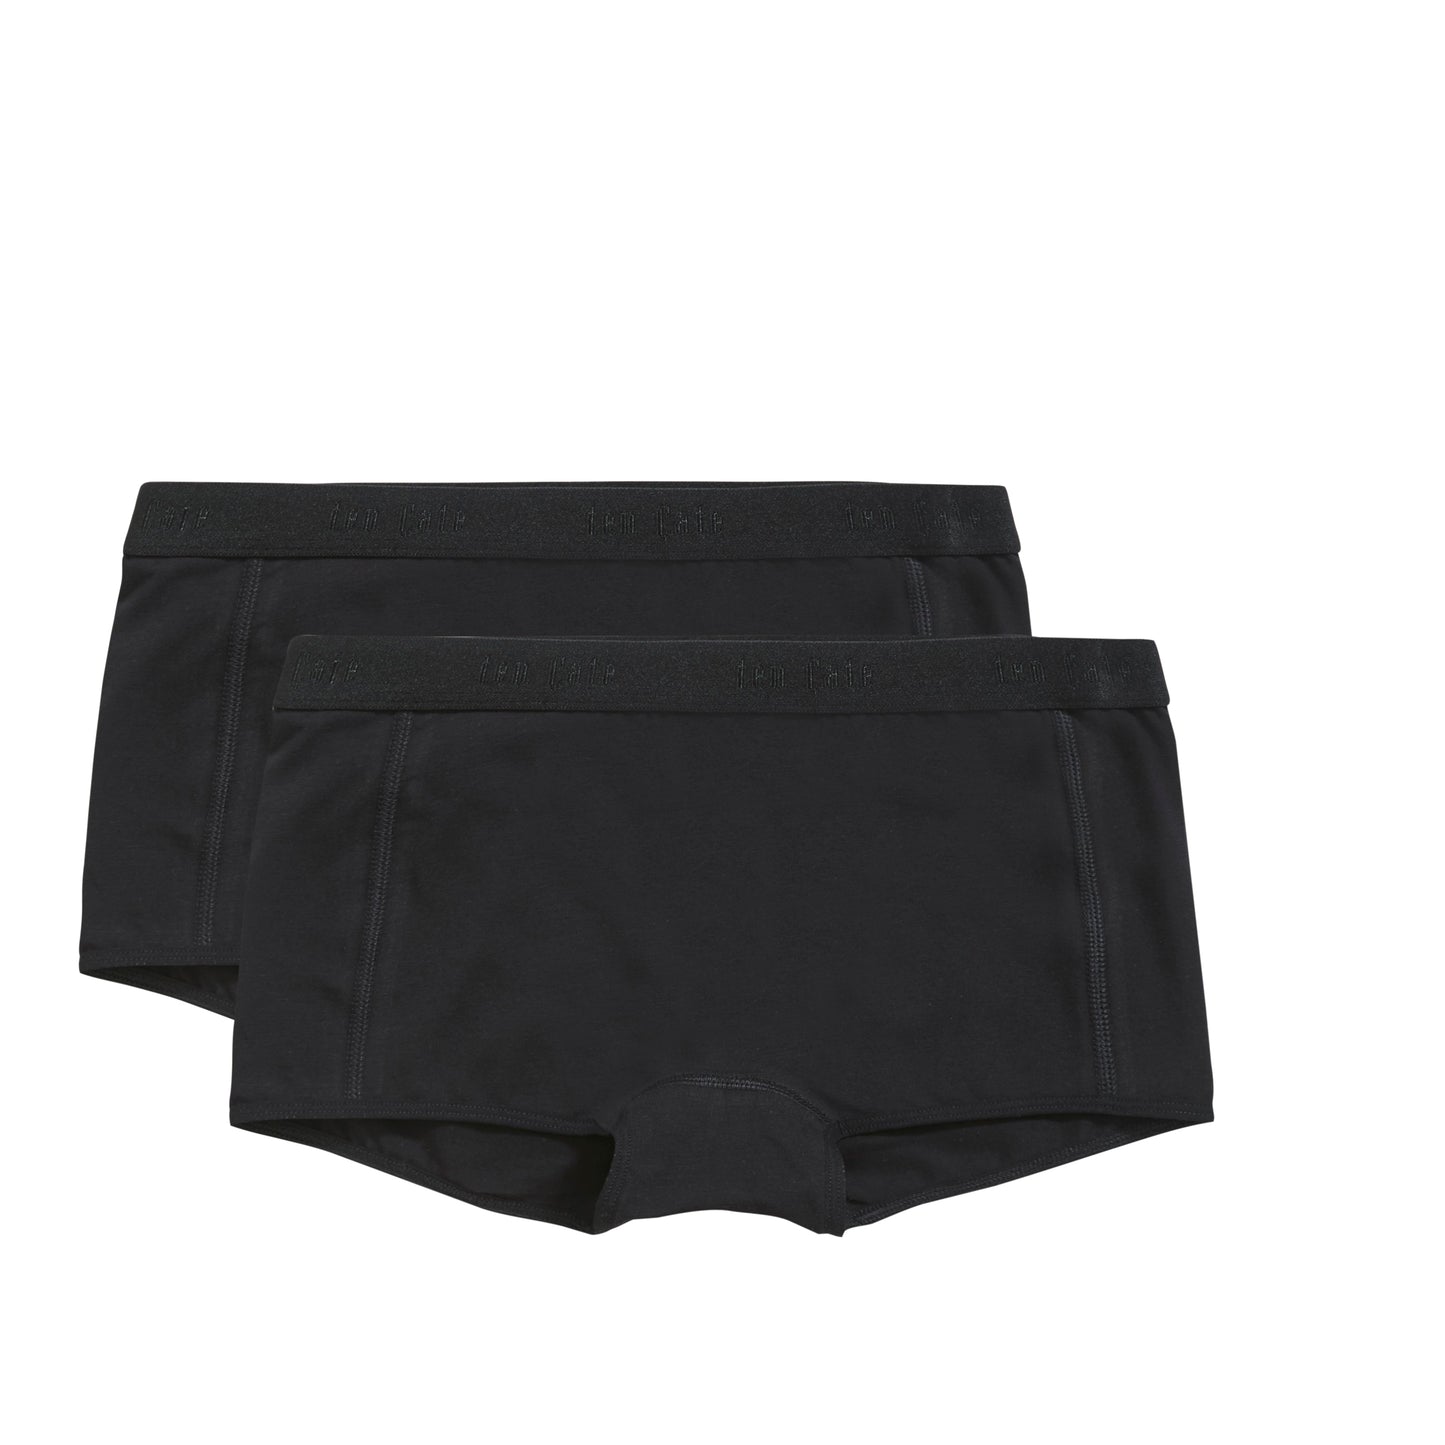 Ten Cate Meisjes shorts 2 pack - 31986 - 5 kleuren